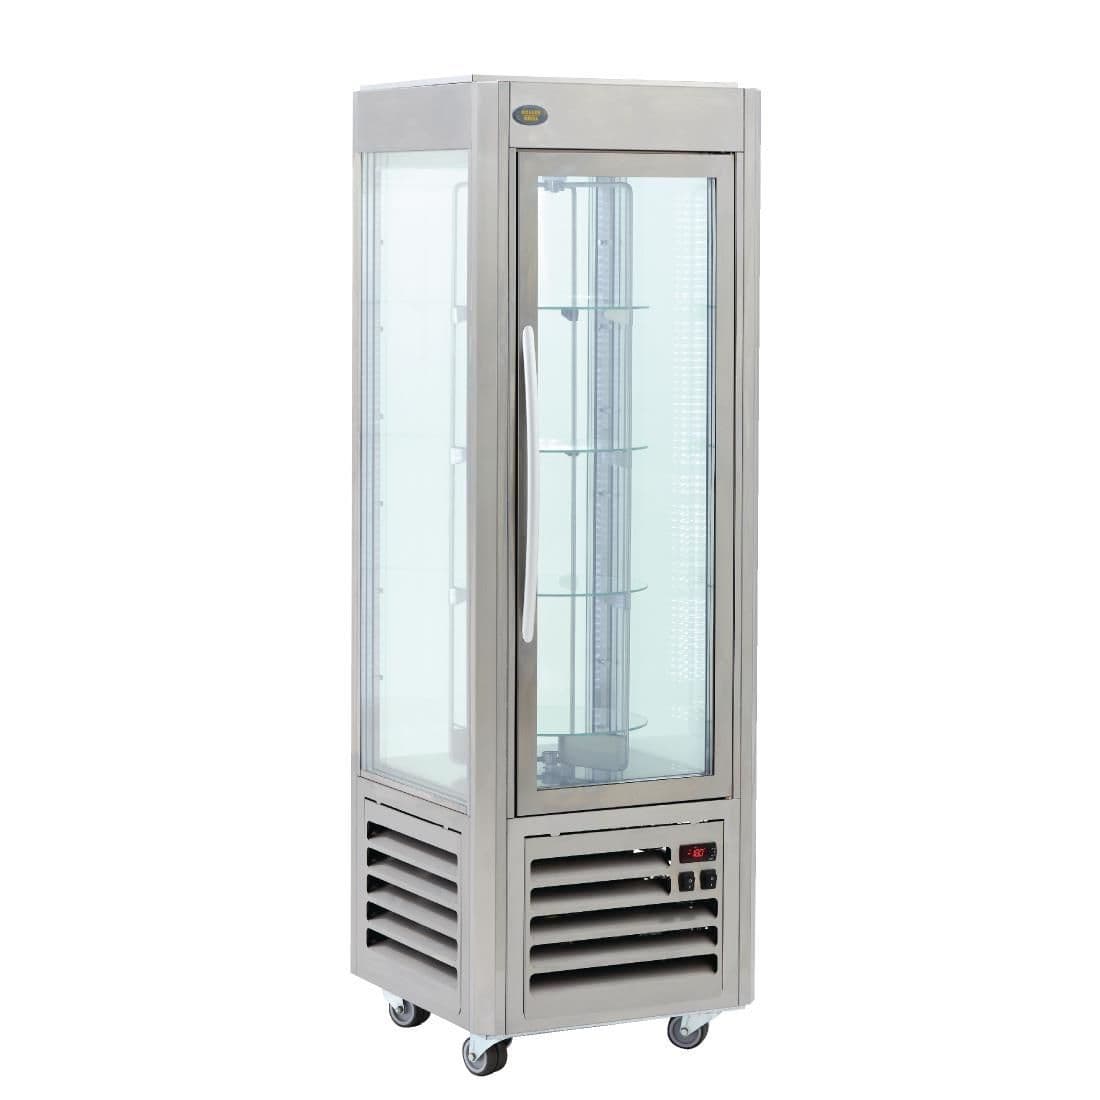 GD340 Roller Grill Display Freezer 360Ltr JD Catering Equipment Solutions Ltd